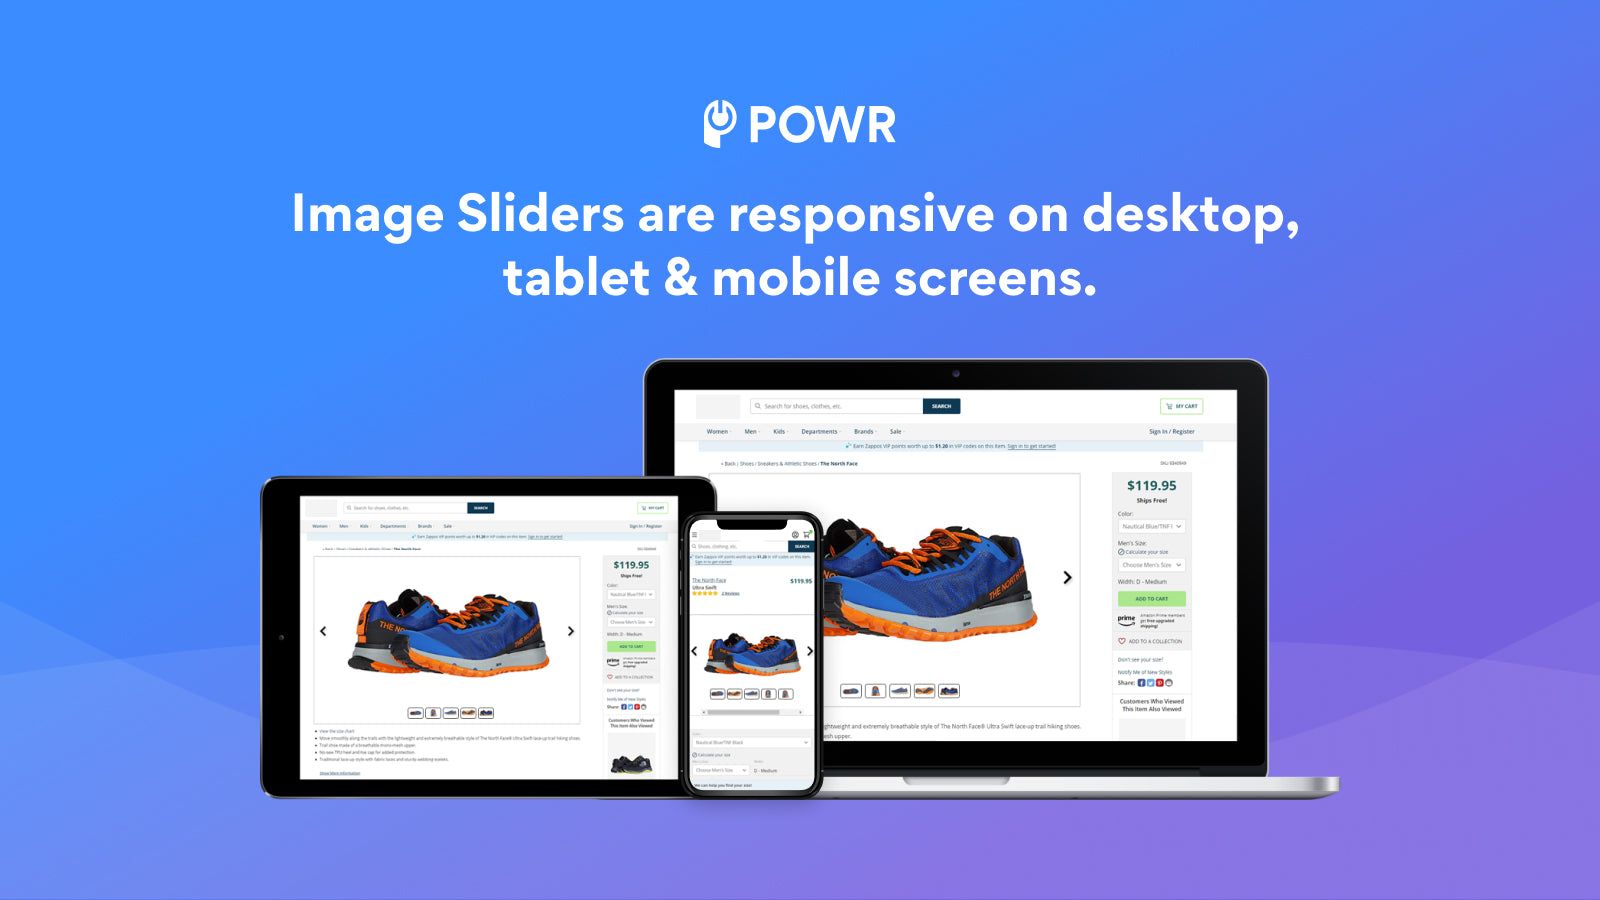 Image sliders are responsive on desktop, tablet & mobile.